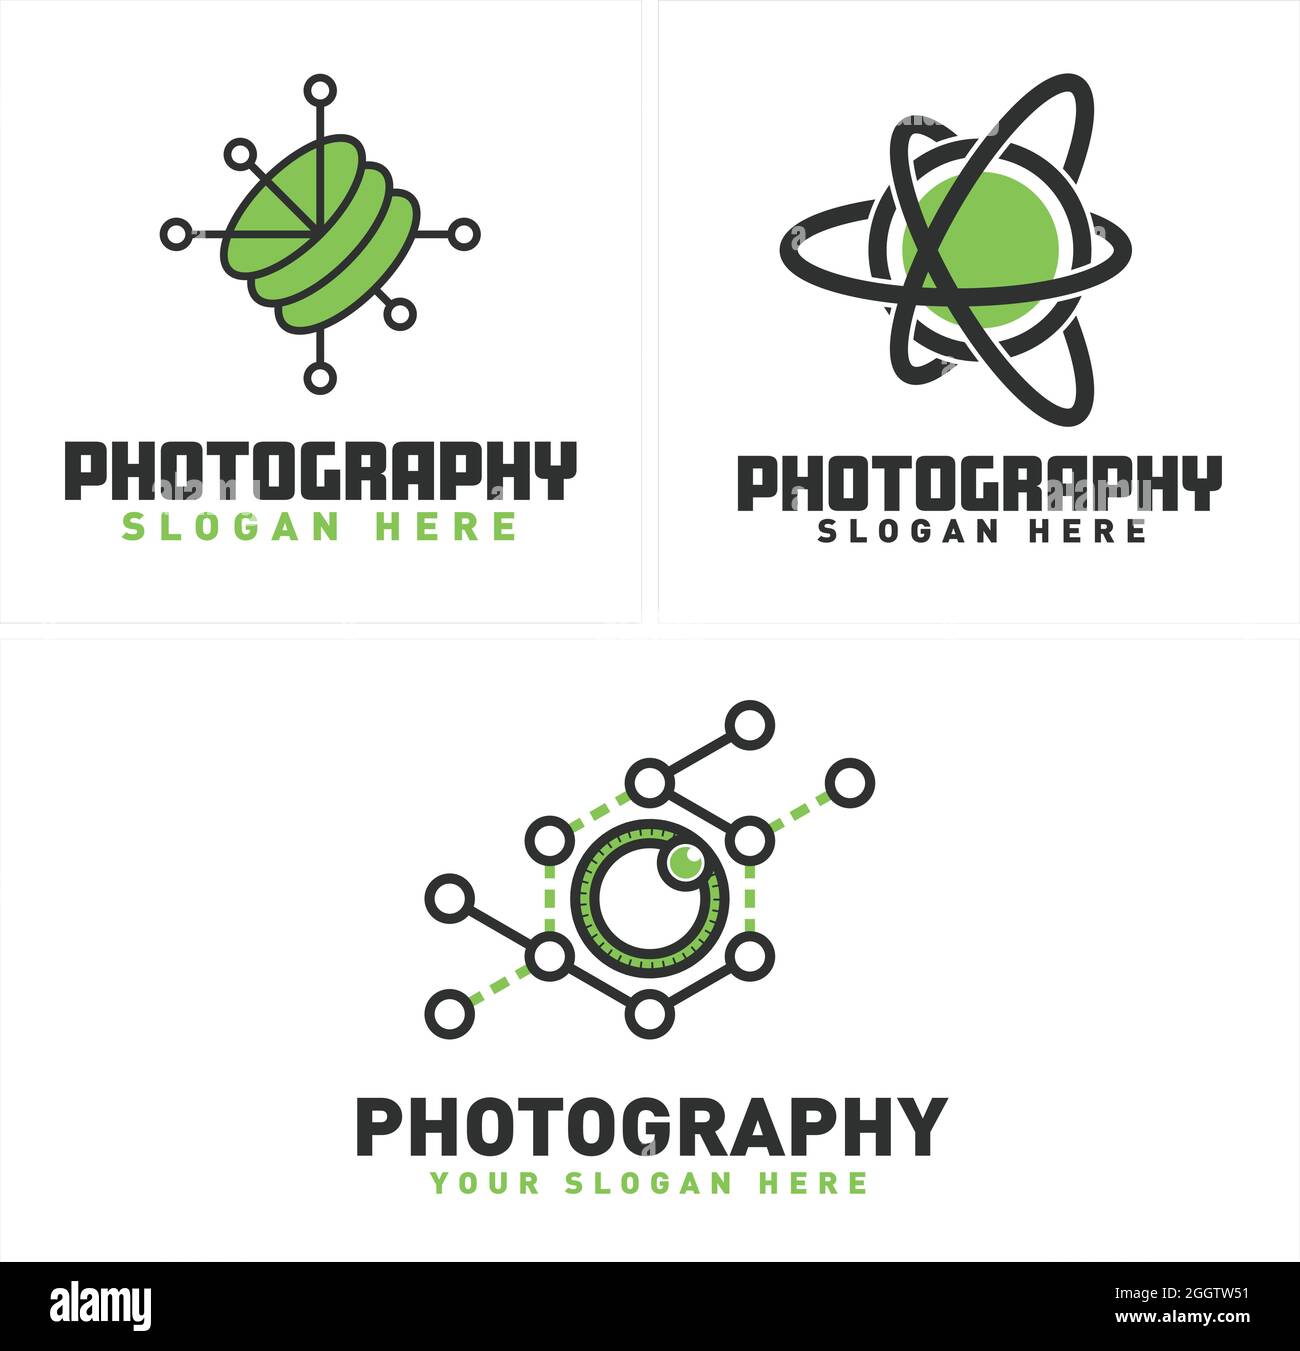 Photography technology connection logo design Stock Vector